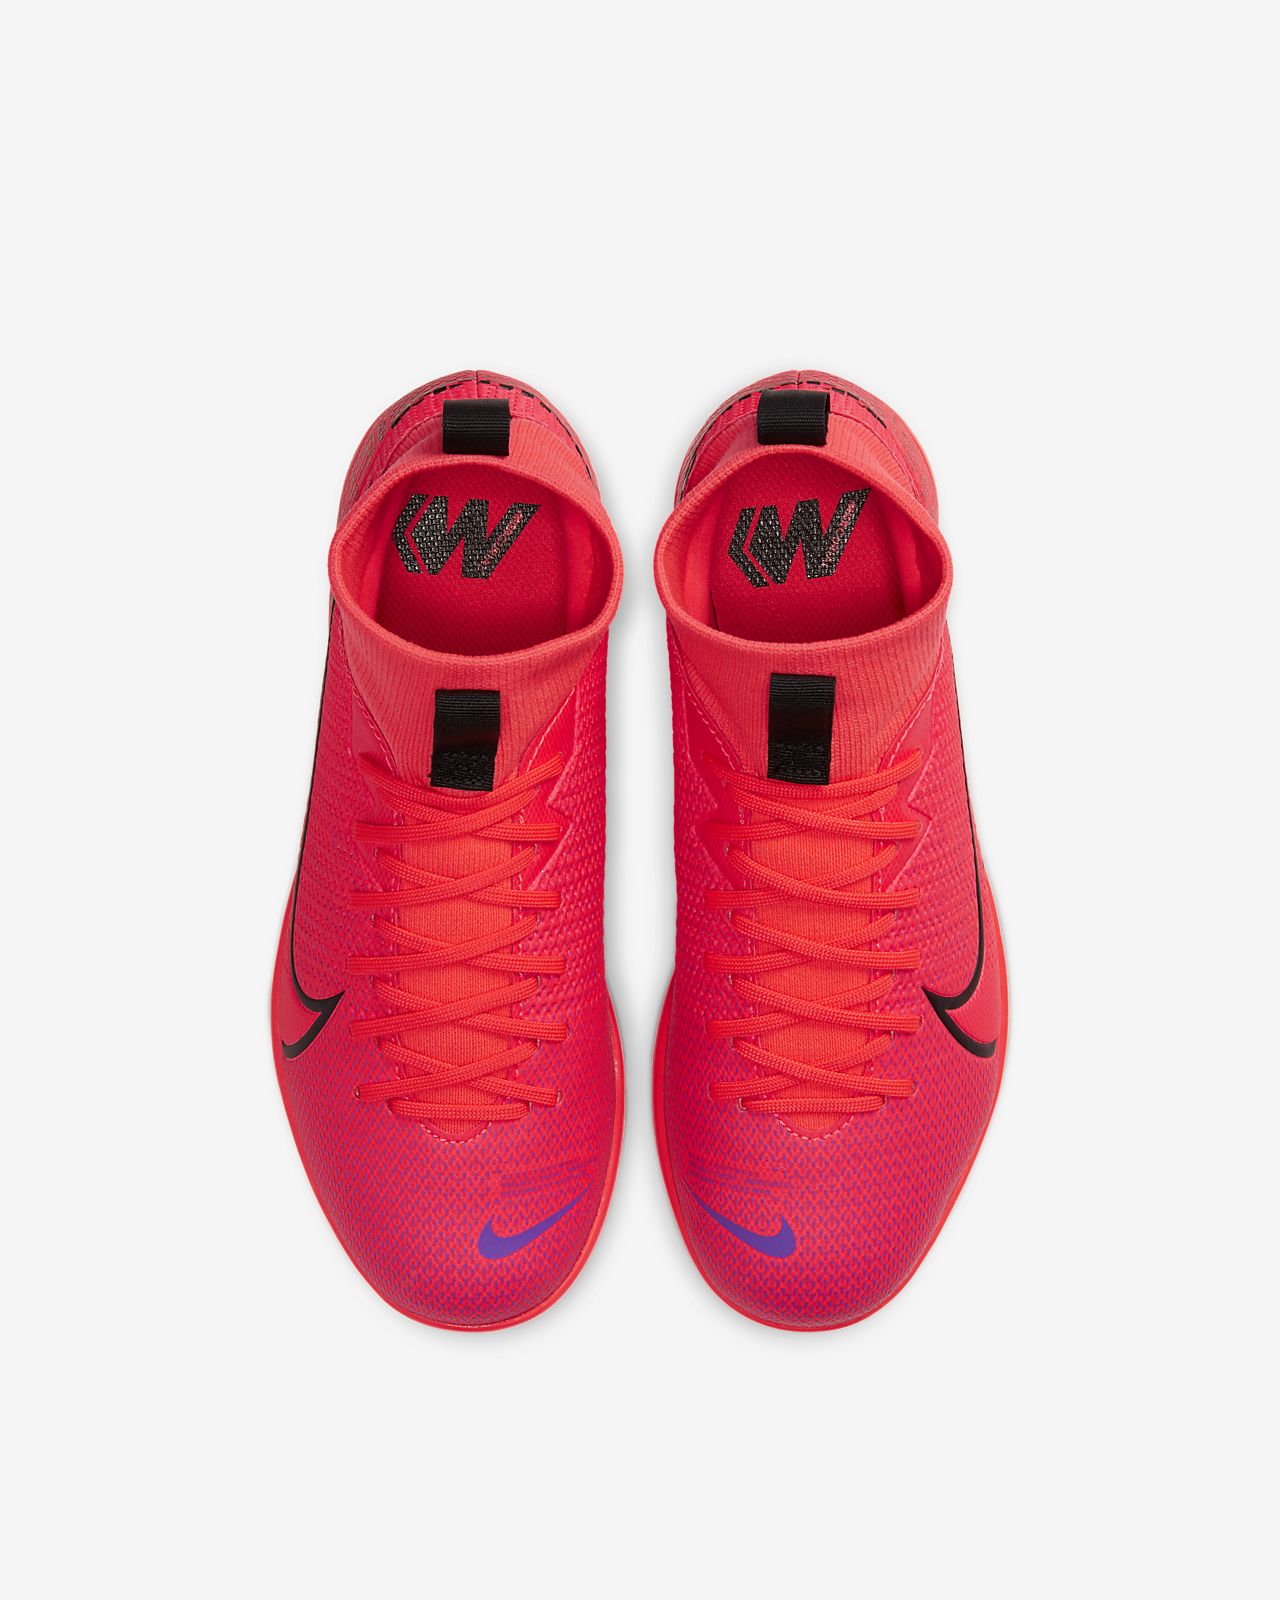 Nike x Jordan Mercurial Superfly 6 Elite AC SG Pro Cleats.